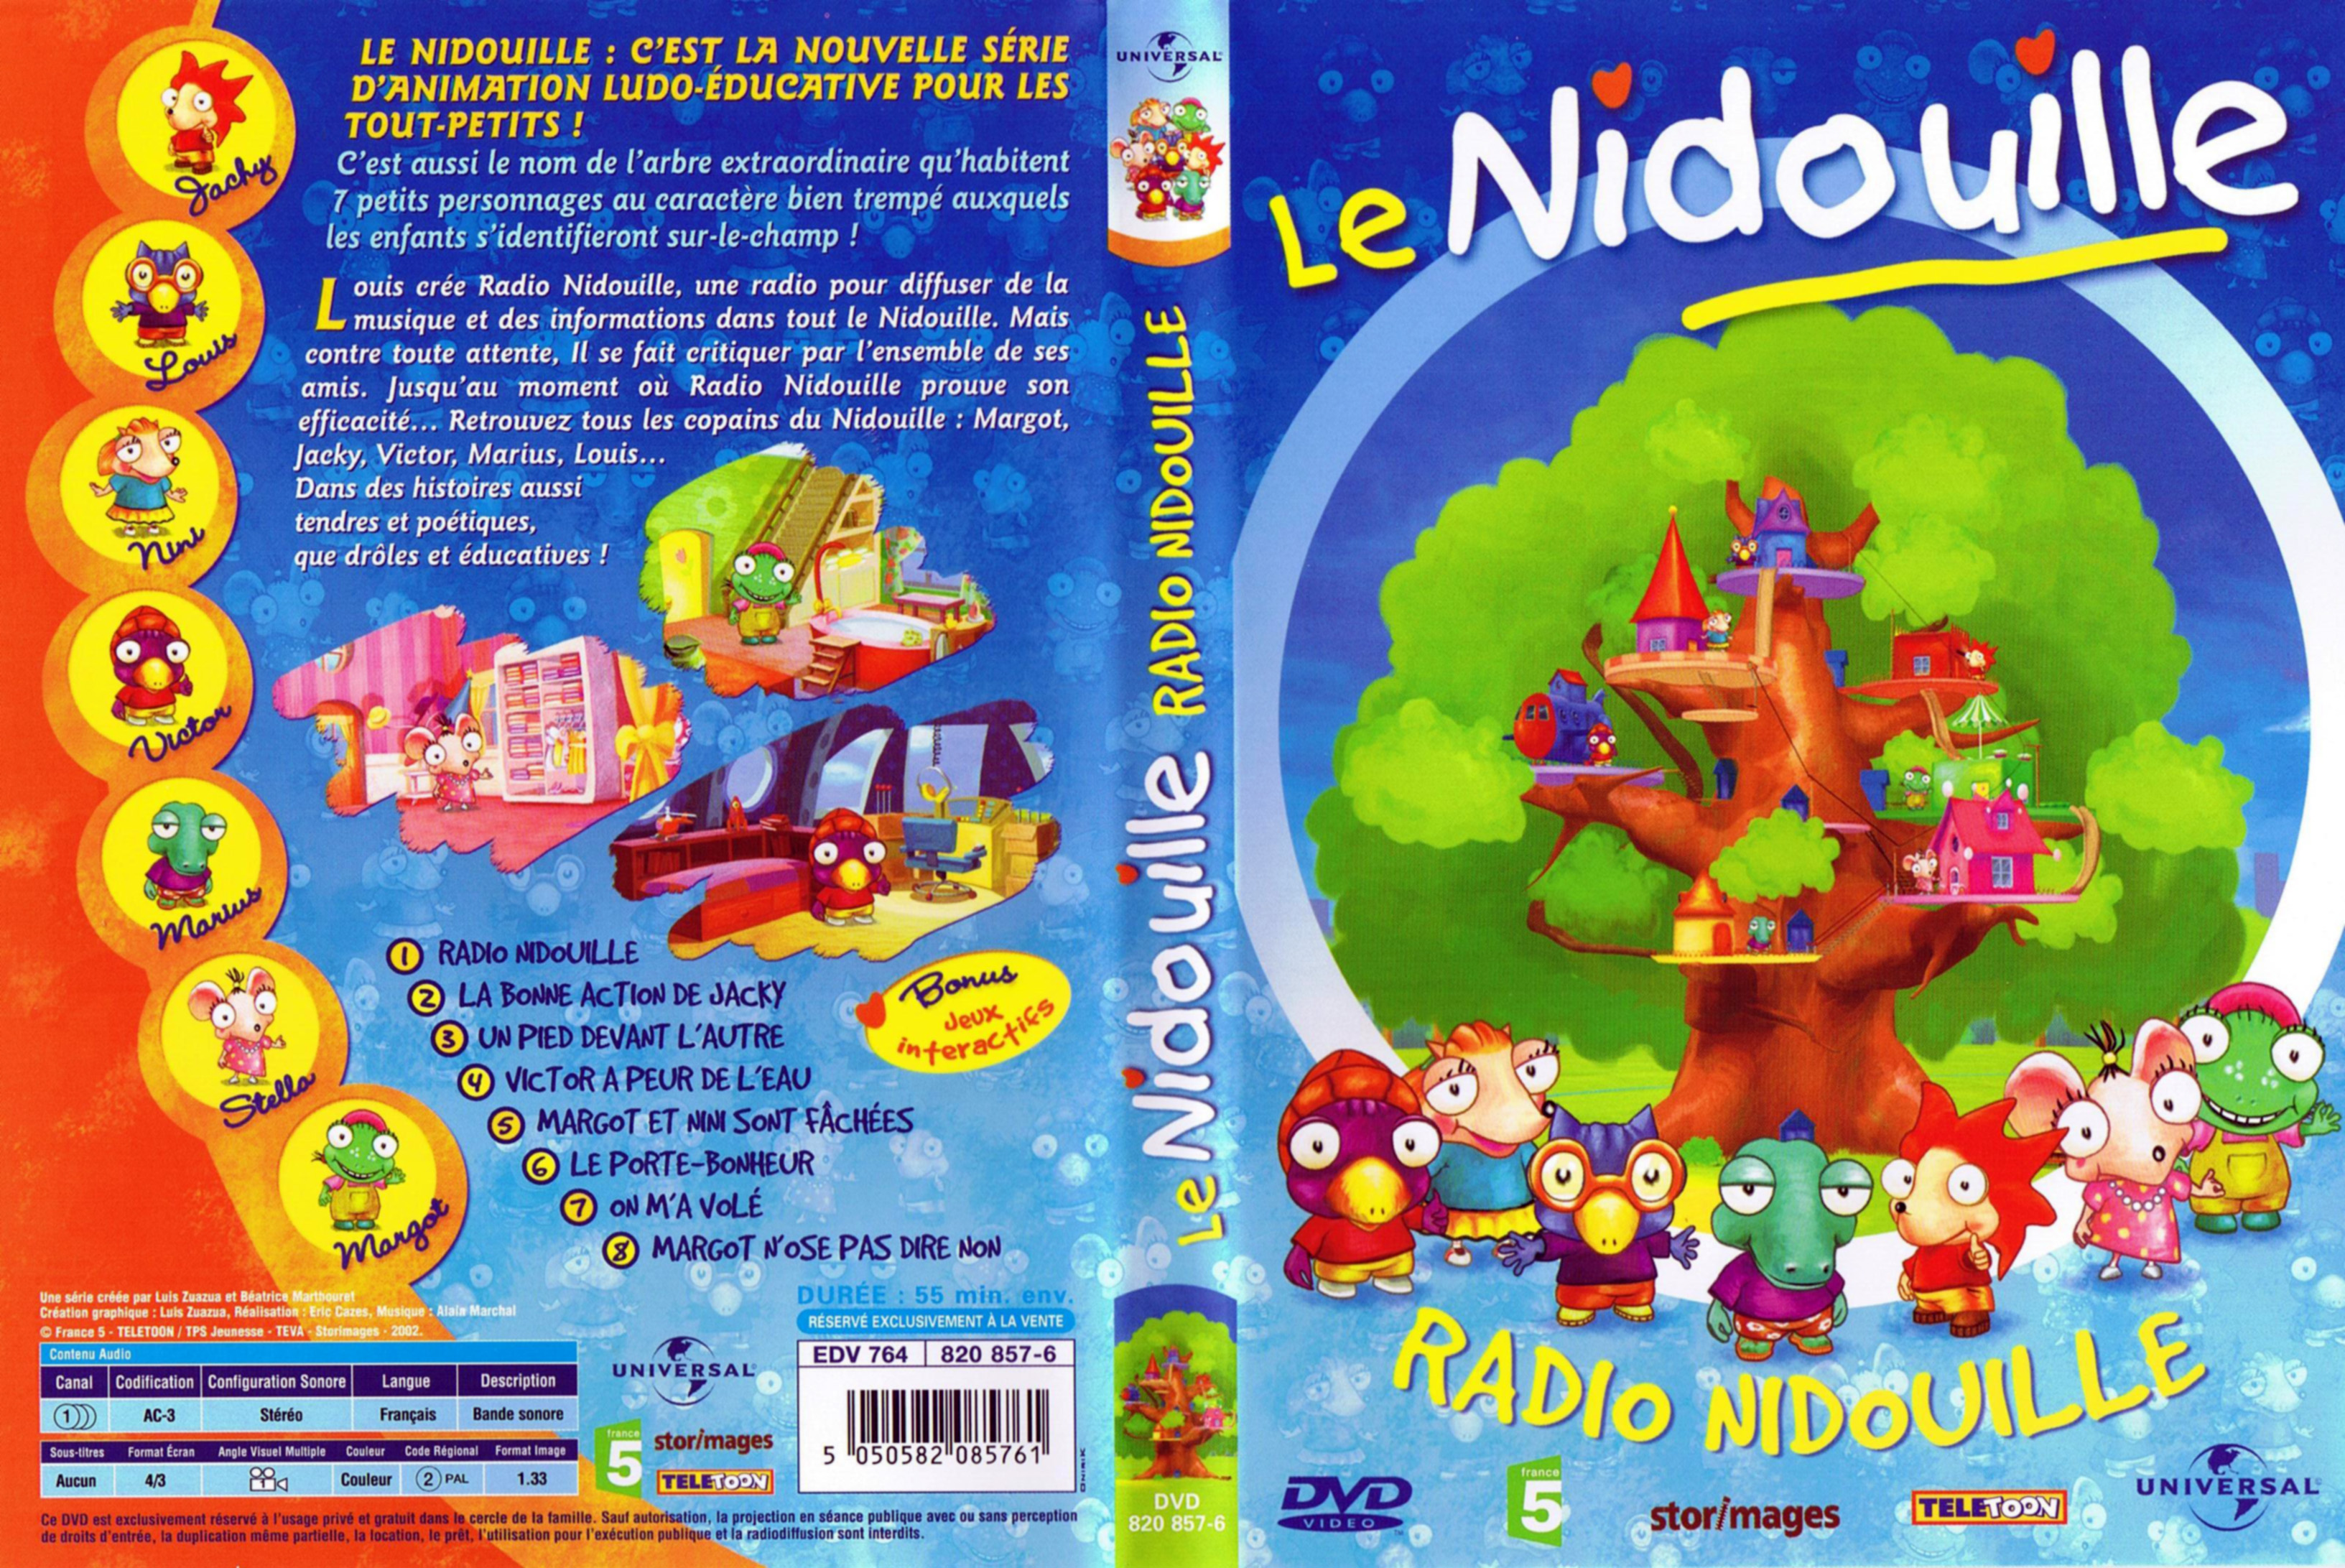 Jaquette DVD Le Nidouille Radio nidouille